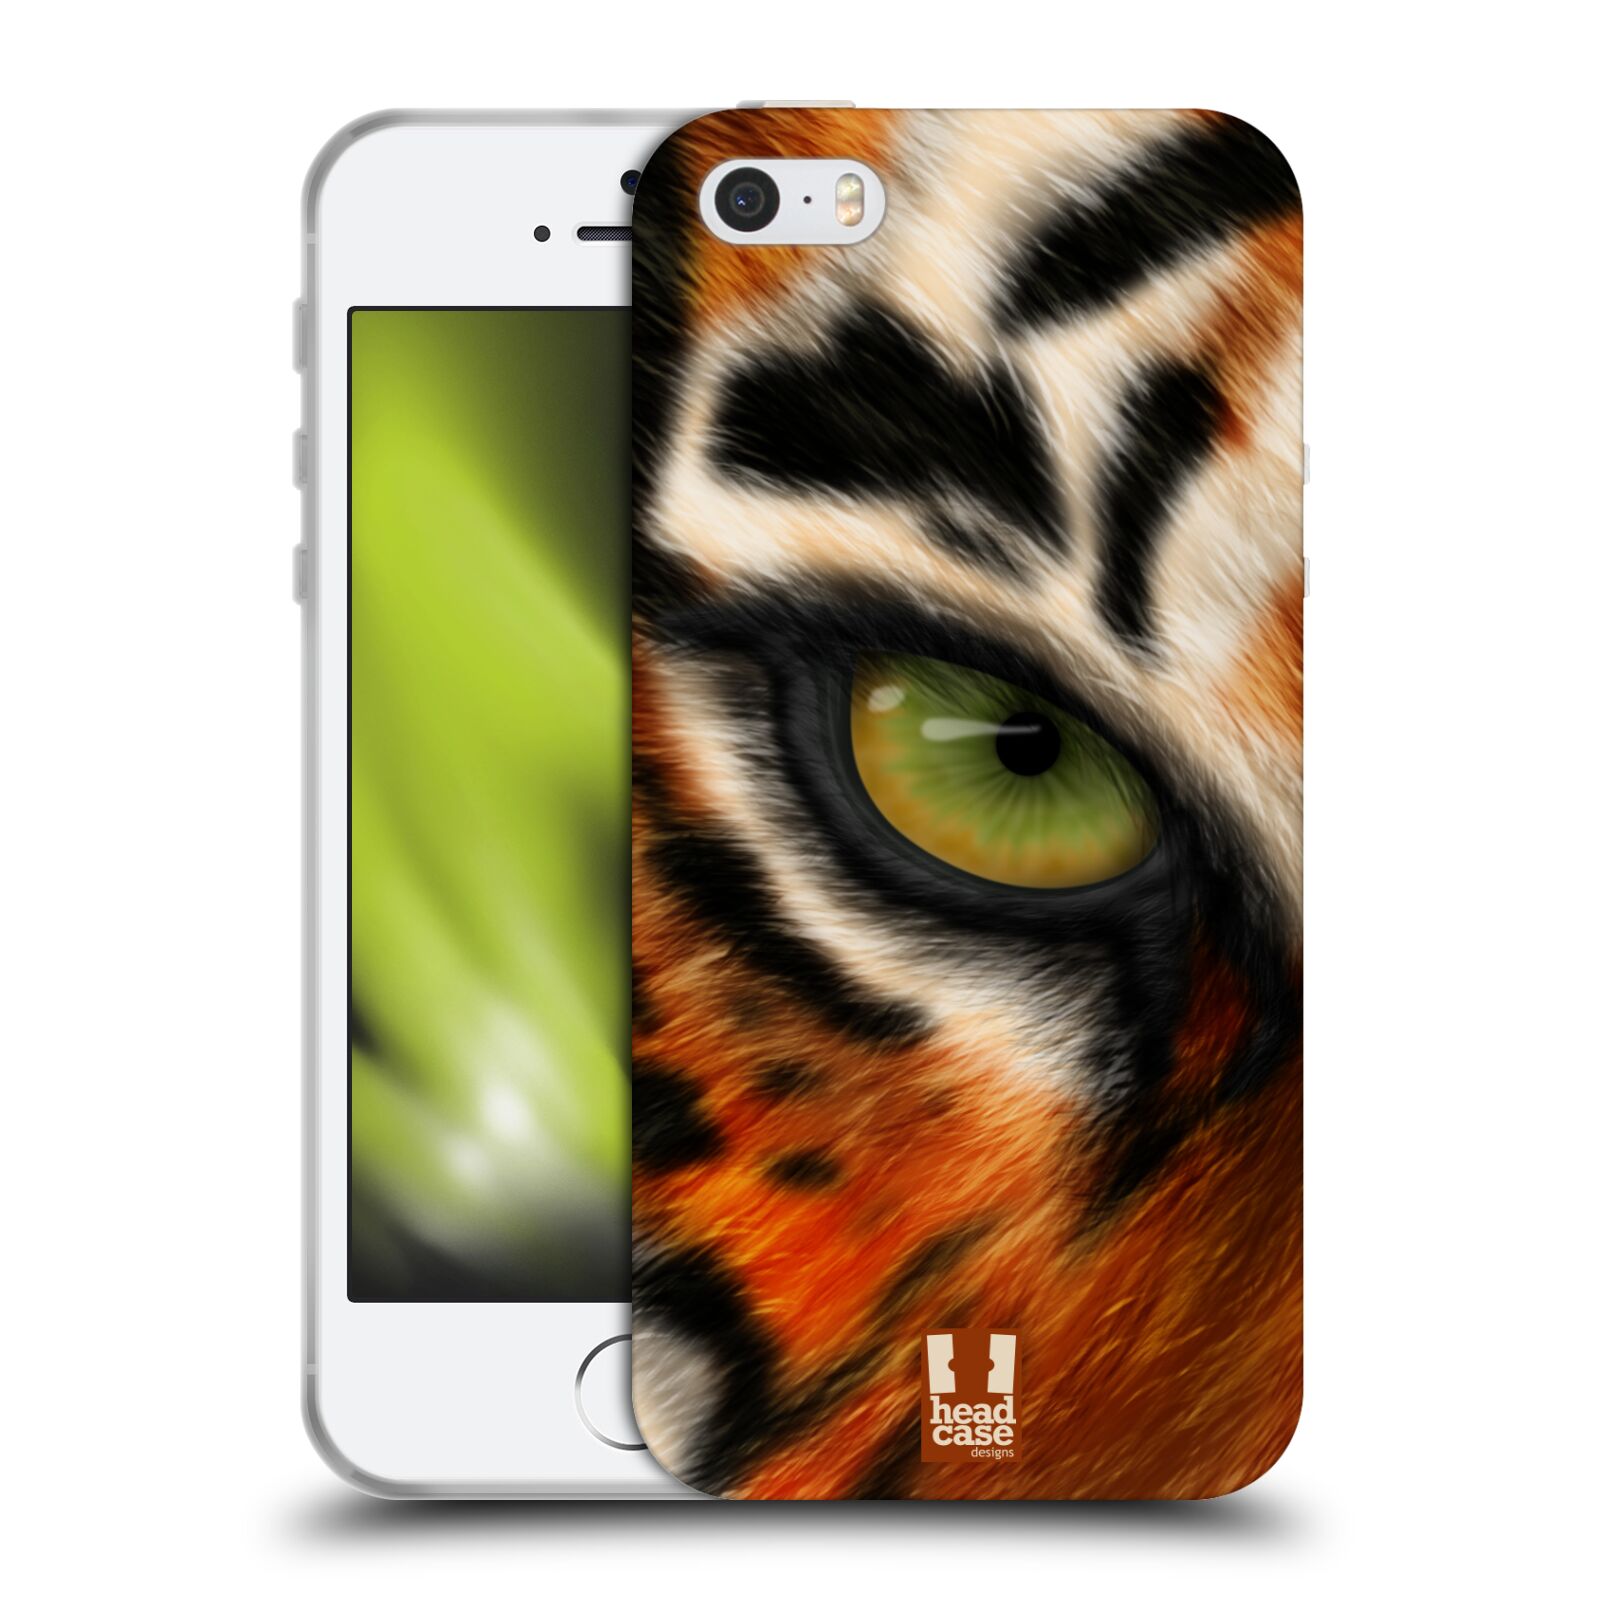 HEAD CASE silikonový obal na mobil Apple Iphone SE vzor pohled zvířete oko tygr